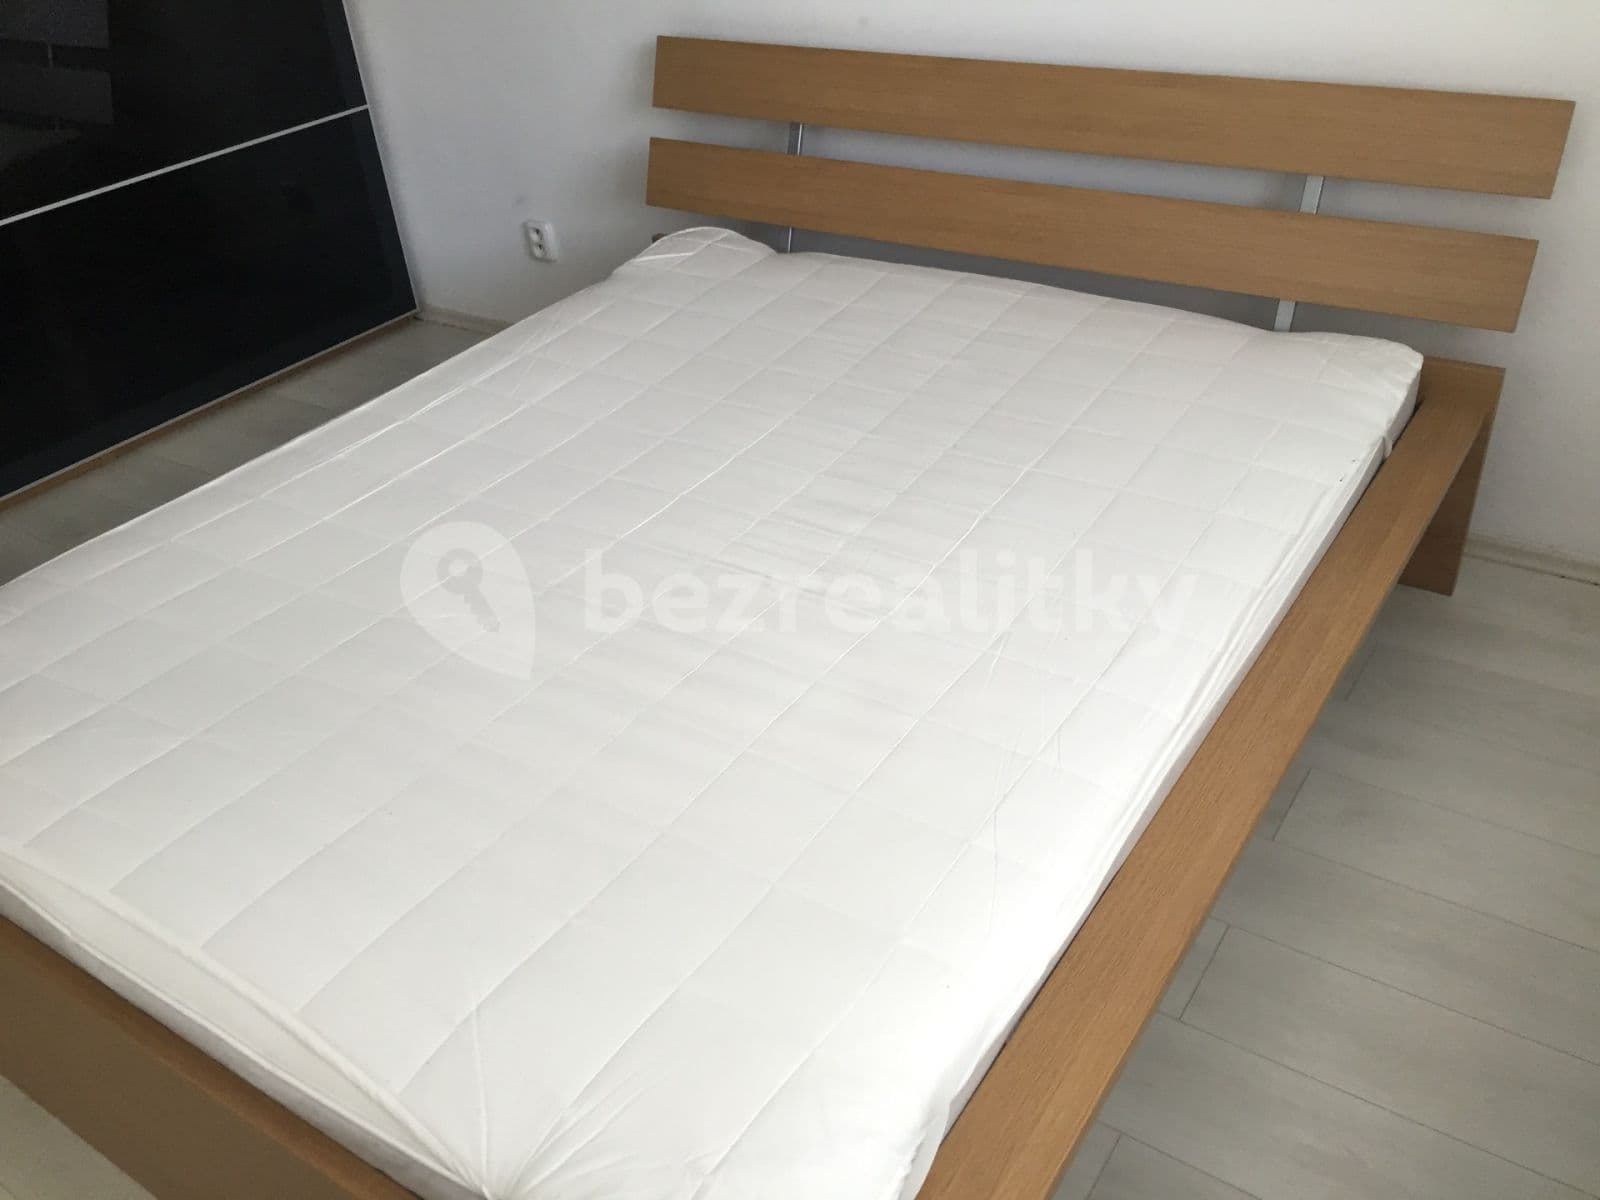 2 bedroom flat to rent, 52 m², Dvorského, Brno, Jihomoravský Region